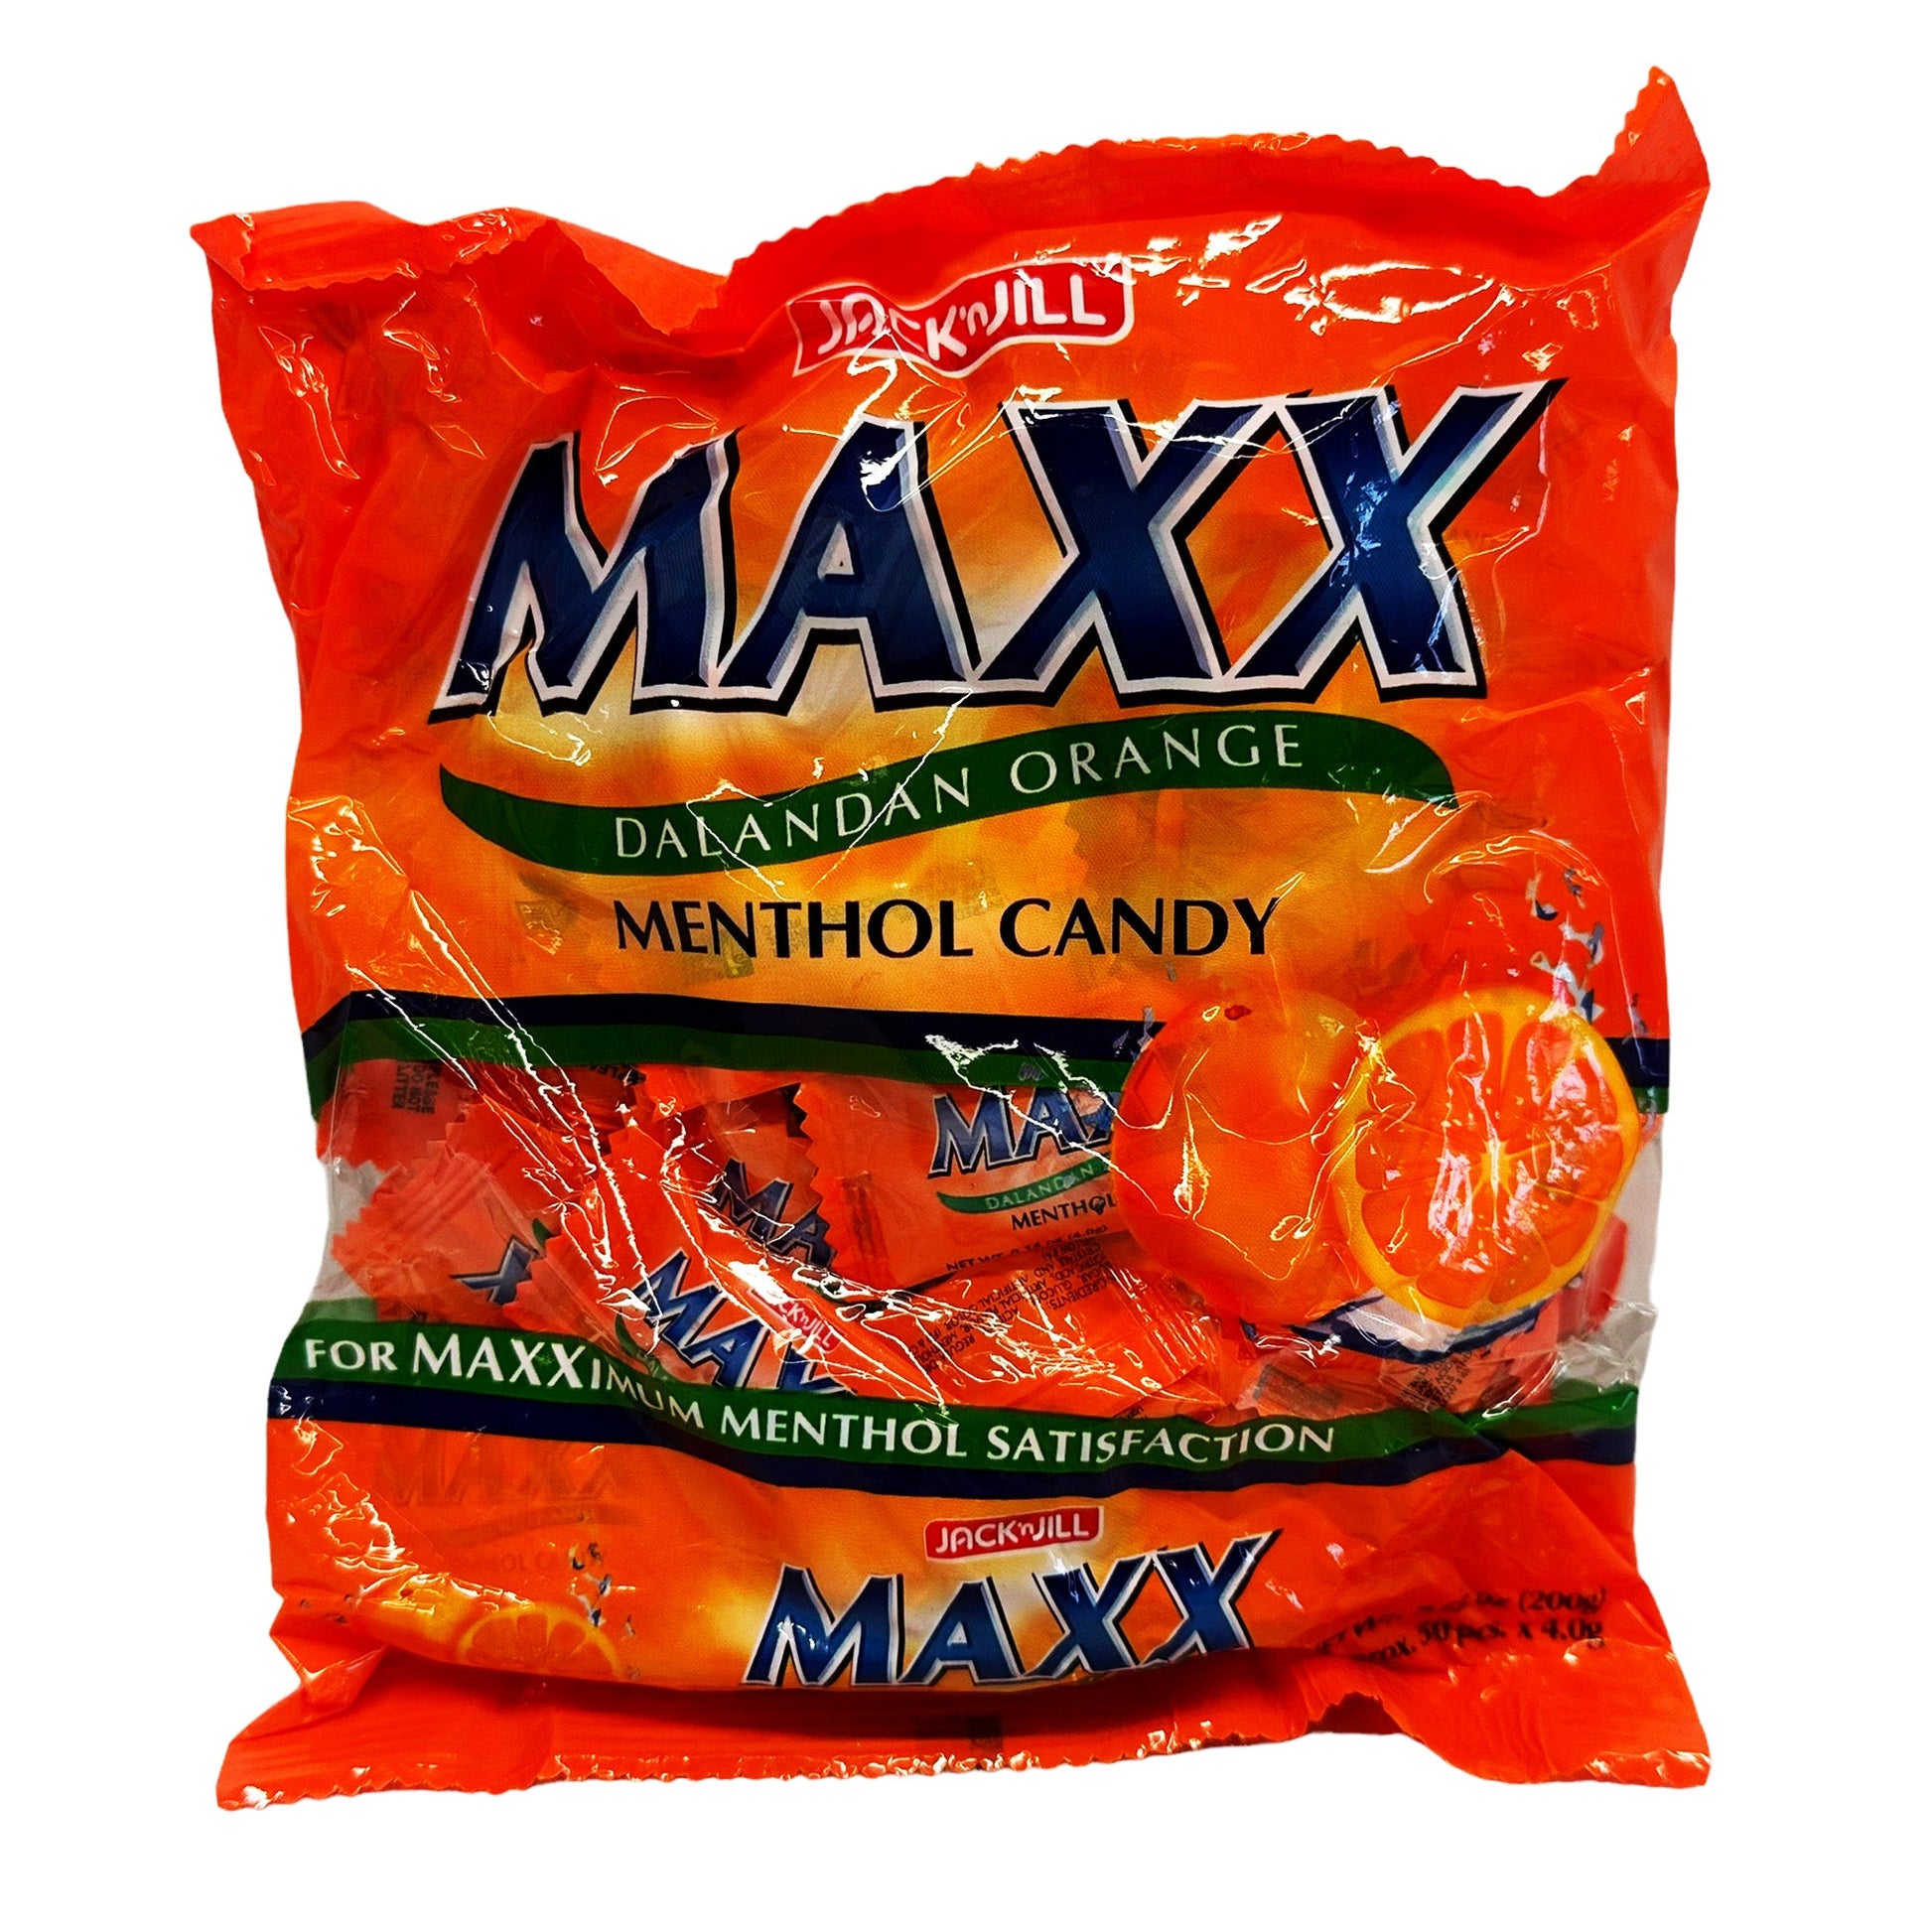 Front graphic image of Jack n' Jill Maxx Menthol Candy Orange - Dalandan 7.94oz